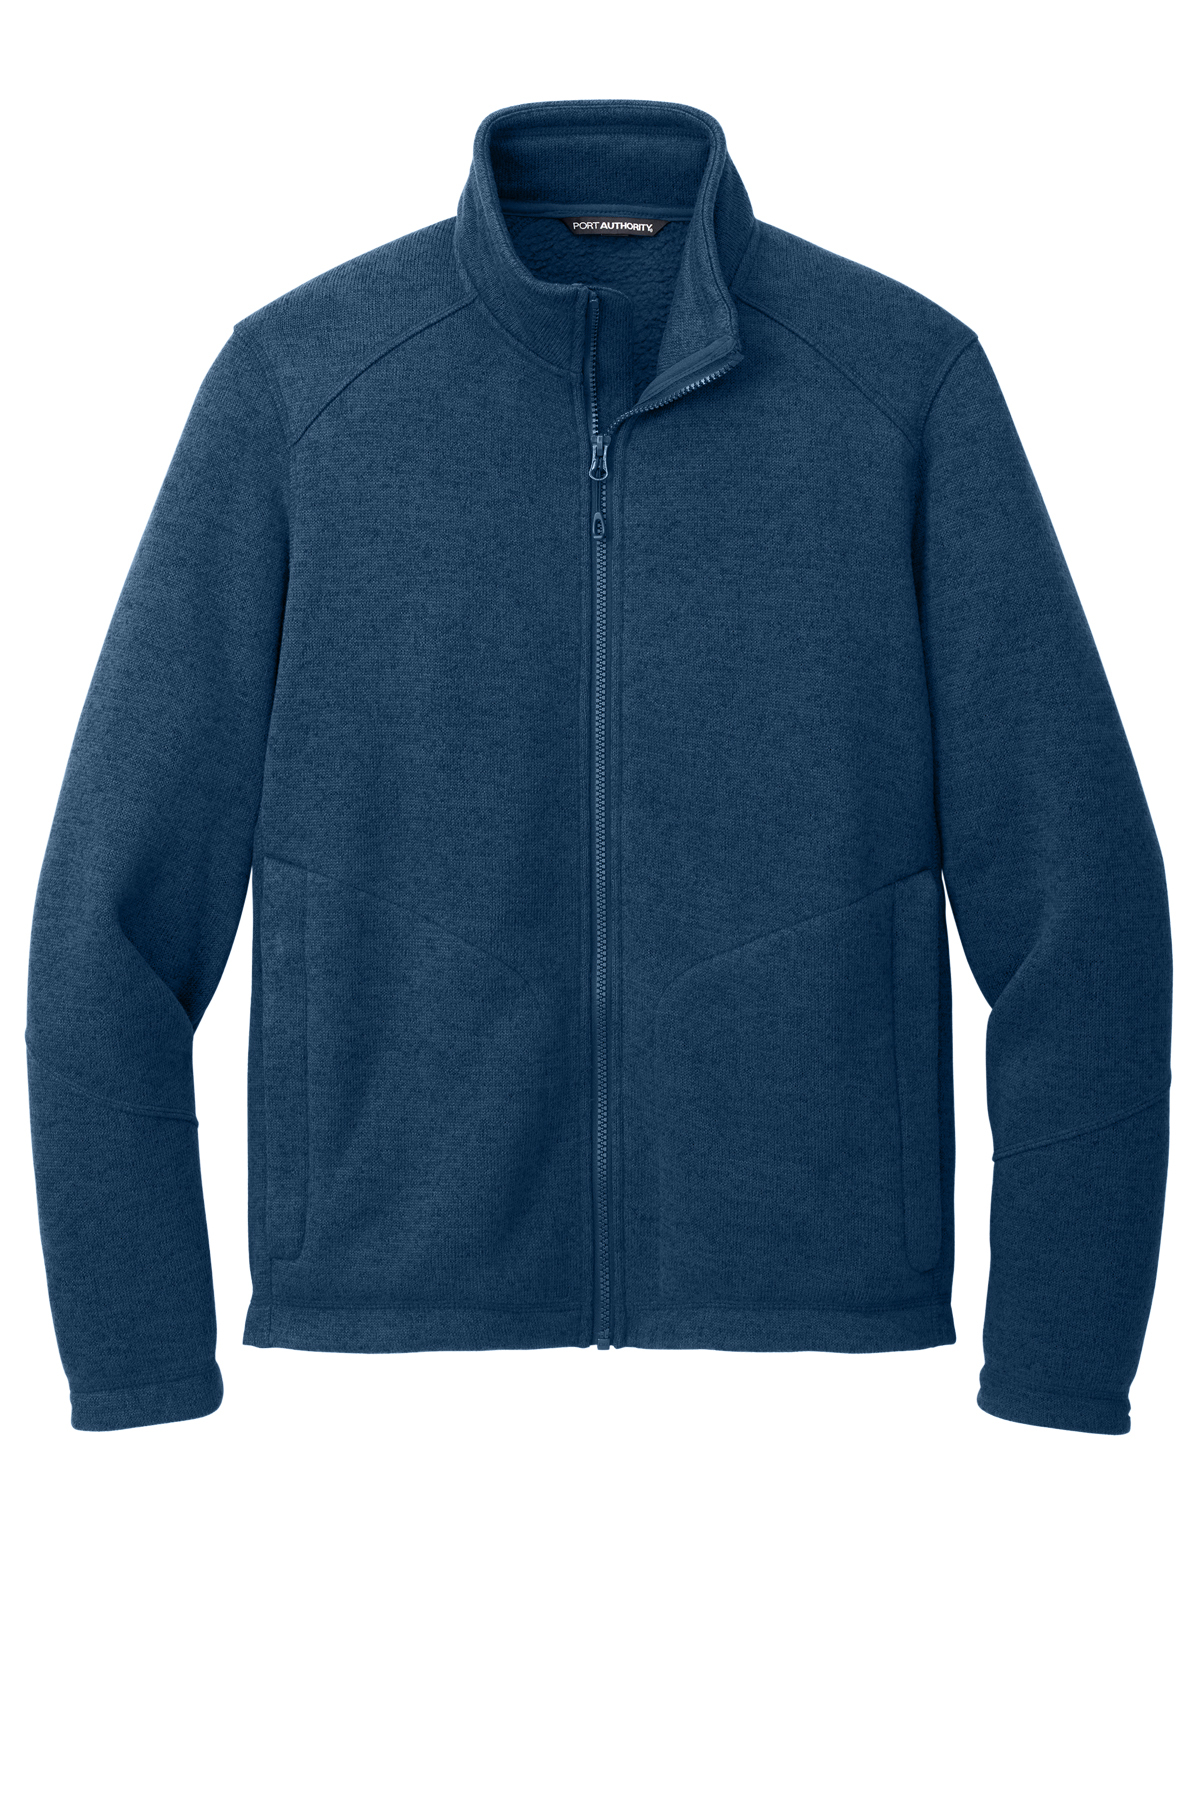 Port Authority Ladies Arc Sweater Fleece Long Jacket L425 - Deep